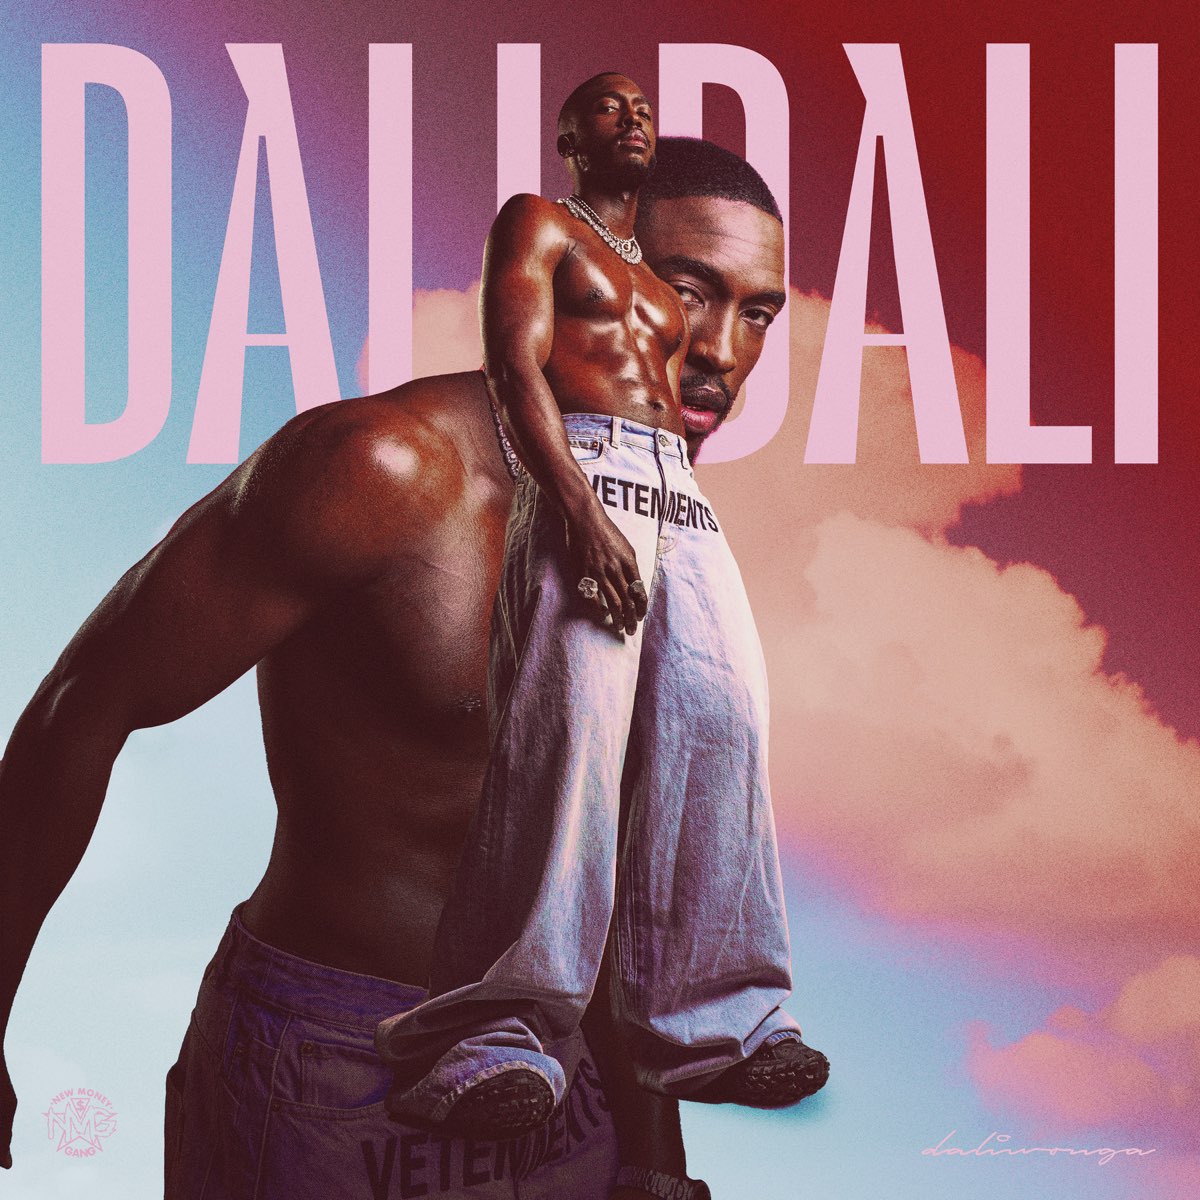 Daliwonga - Bana Ba ft. Shaunmusiq & Ftears mp3 download free lyrics